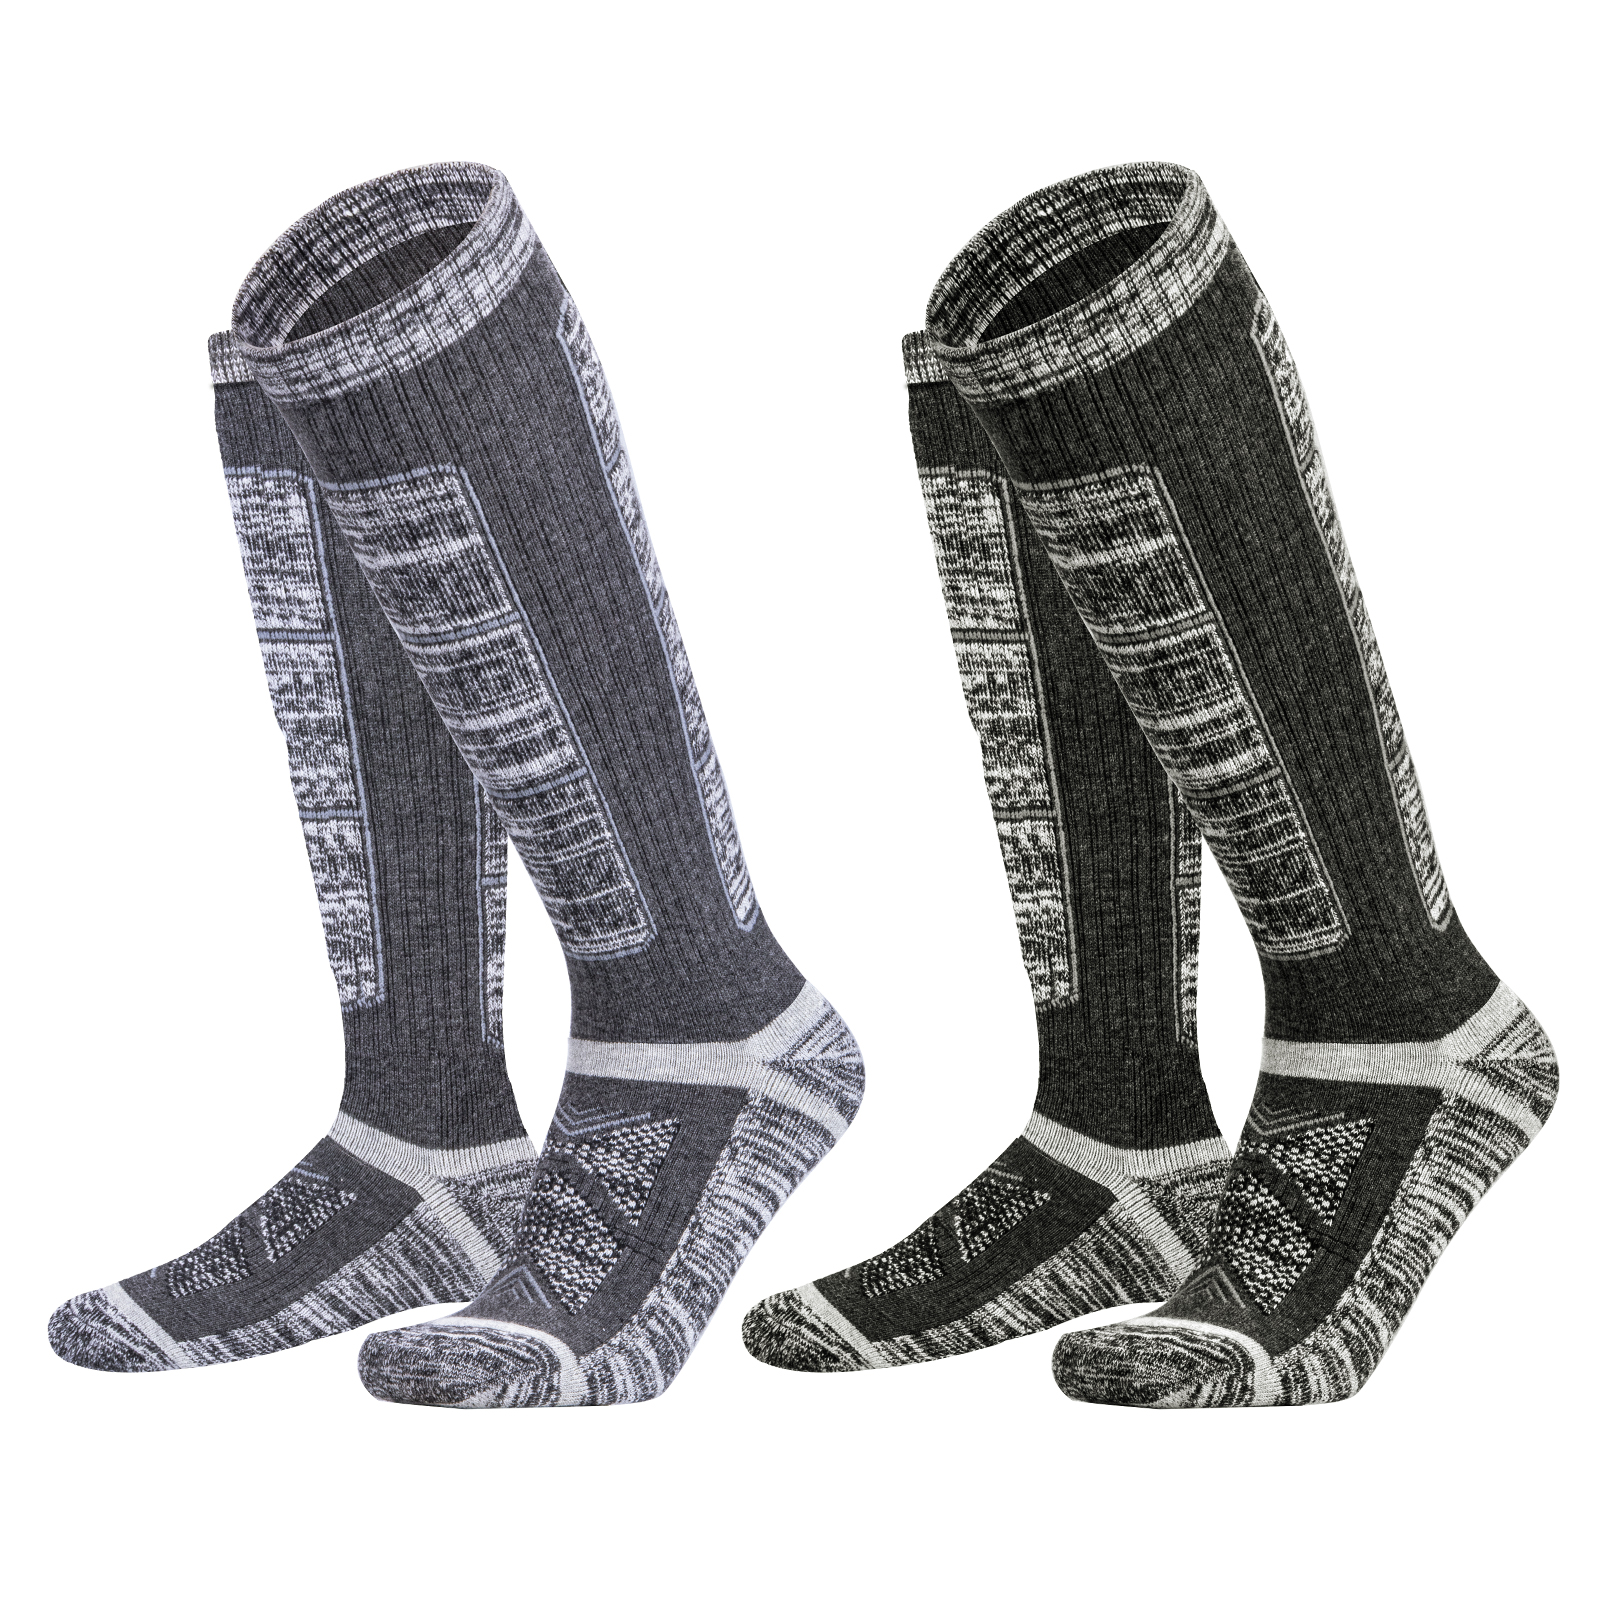 2P2209 Knee High Merino Wool Socks Cushioned Thermal Warm Winter Ski Snowboarding Sports Socks